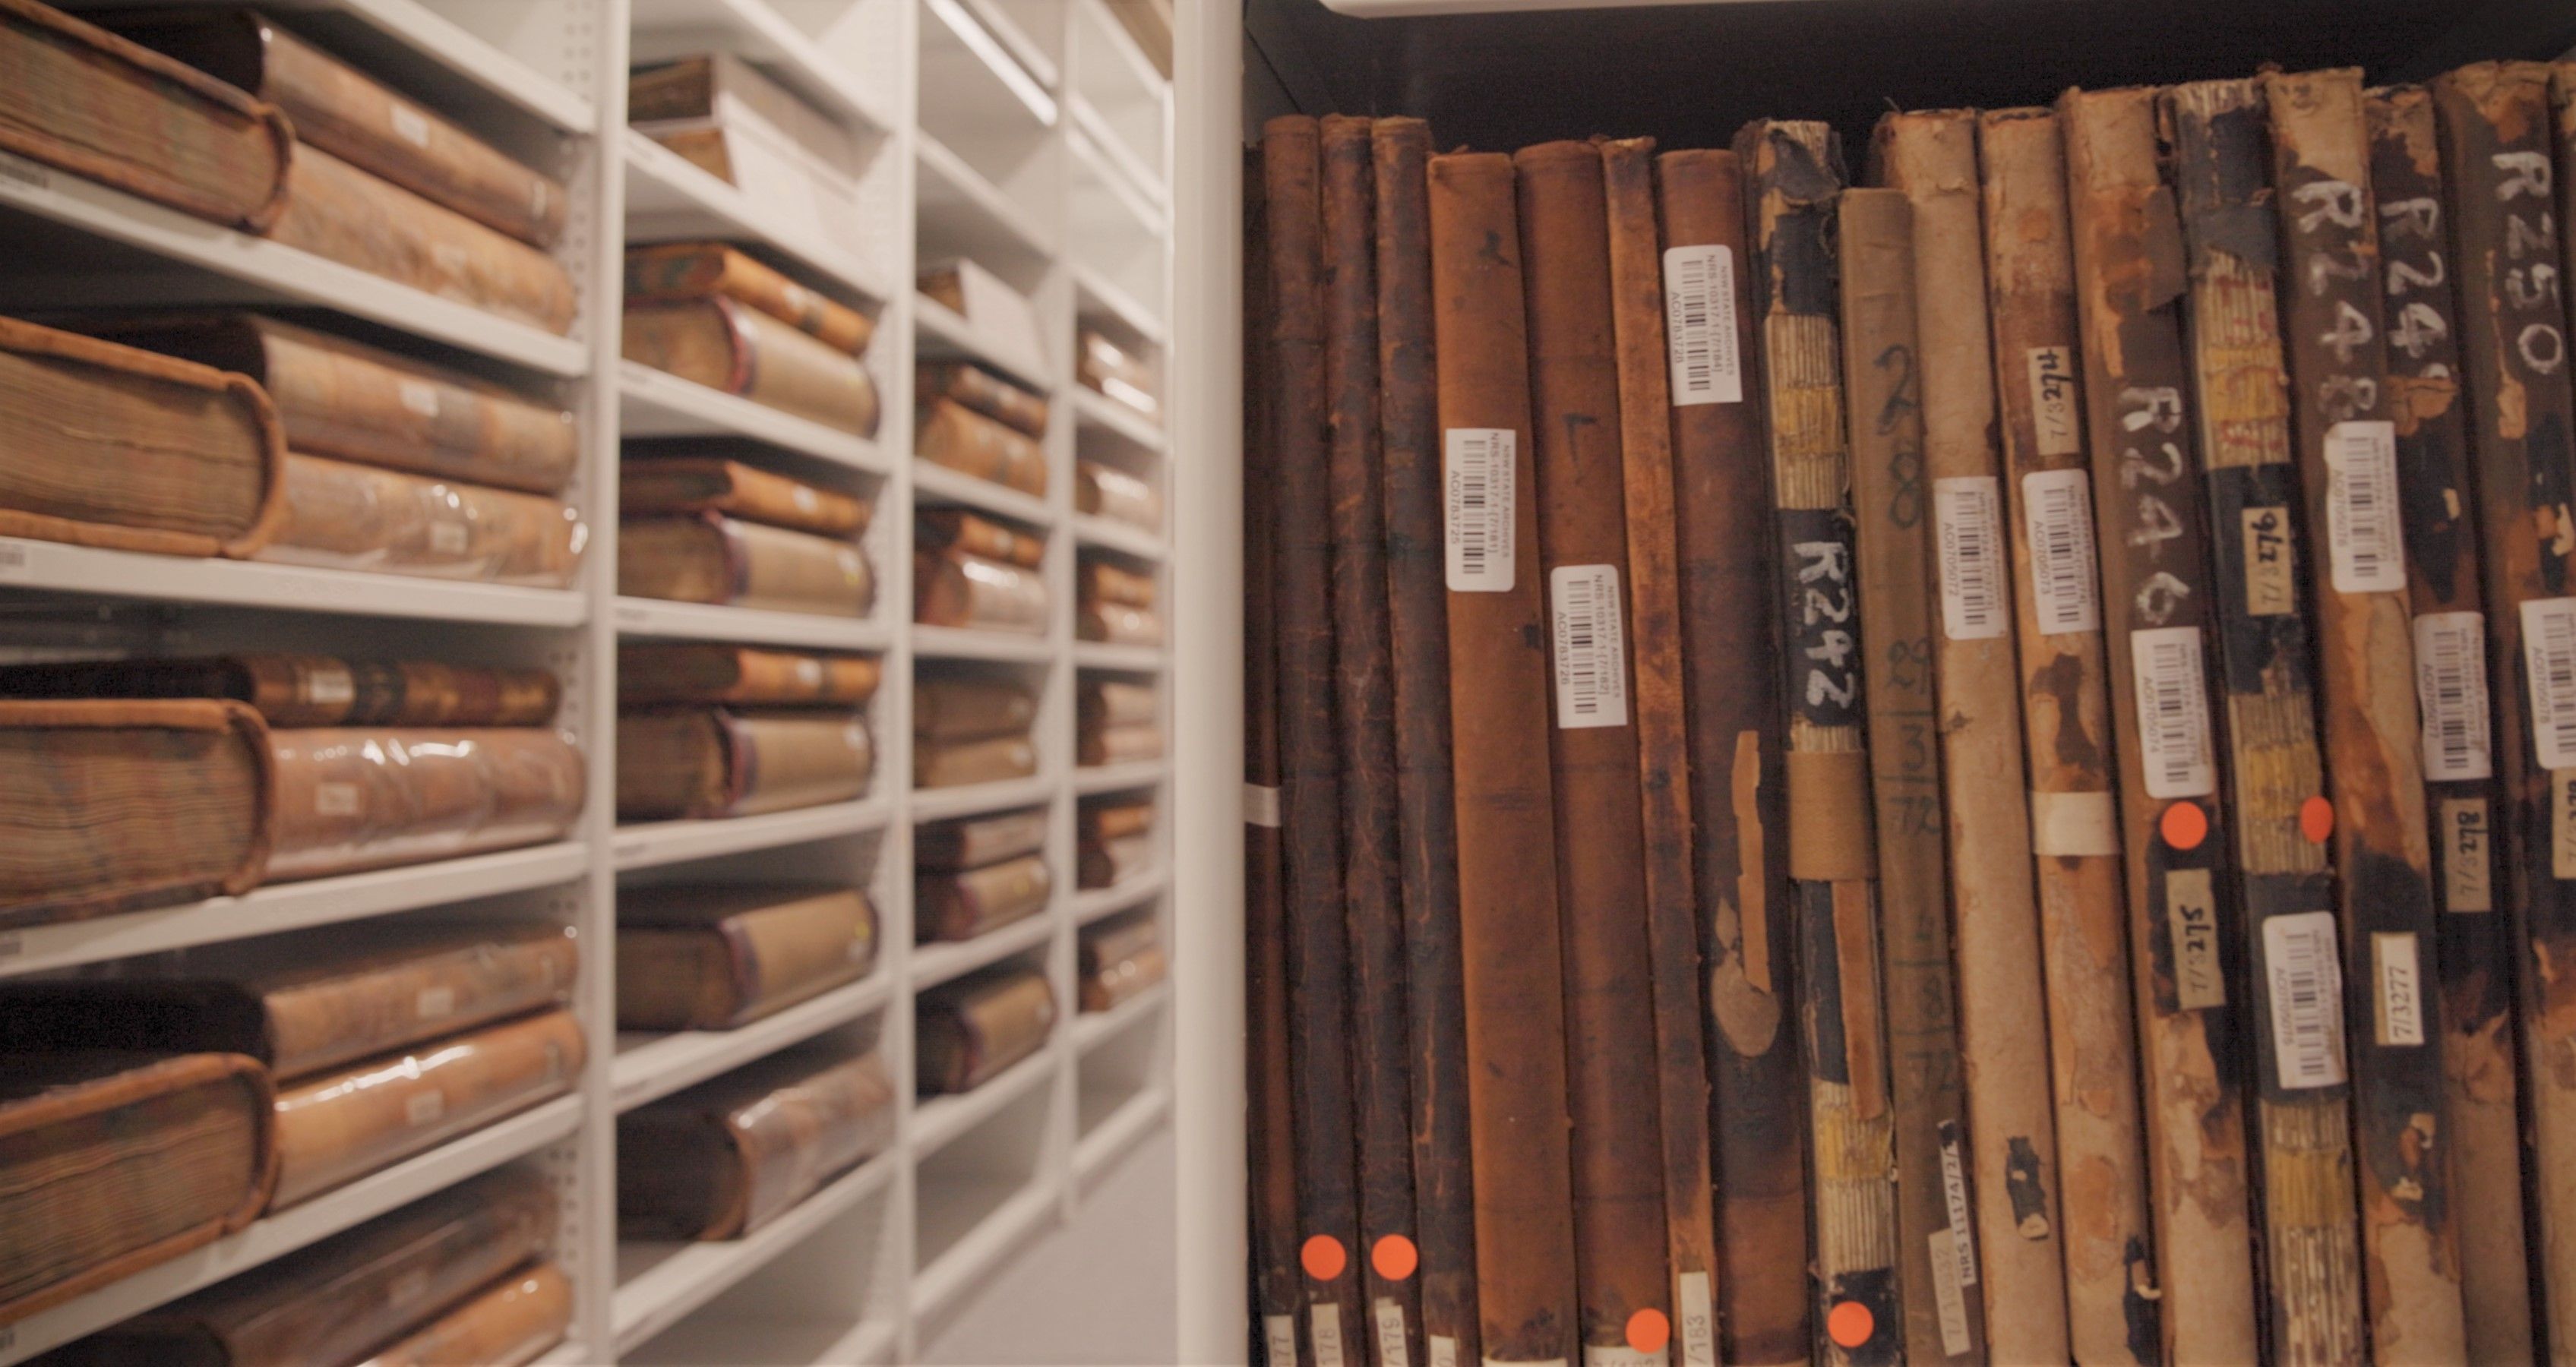 Archival volumes on storage shelves